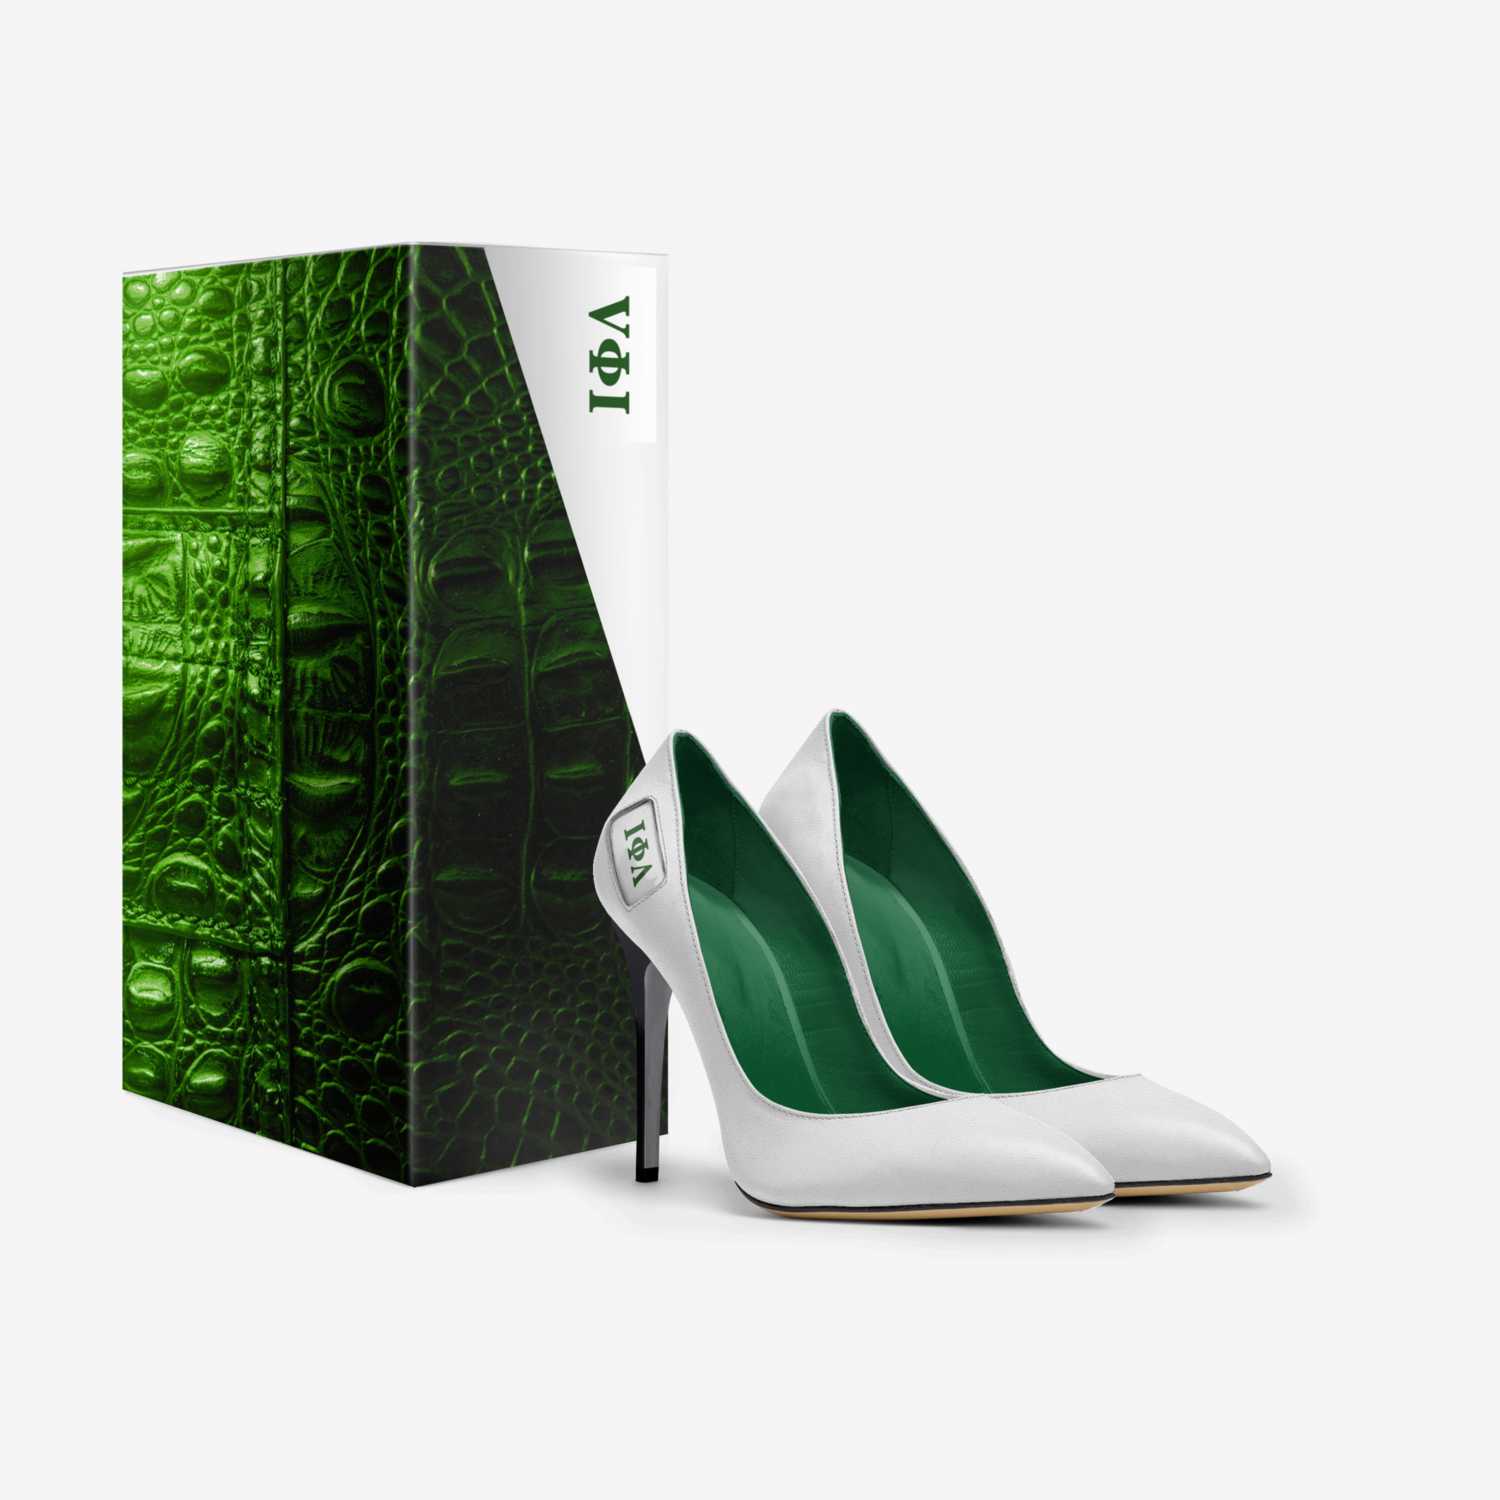 Iota Lady N2 custom made in Italy shoes by Chana Brooks | Box view